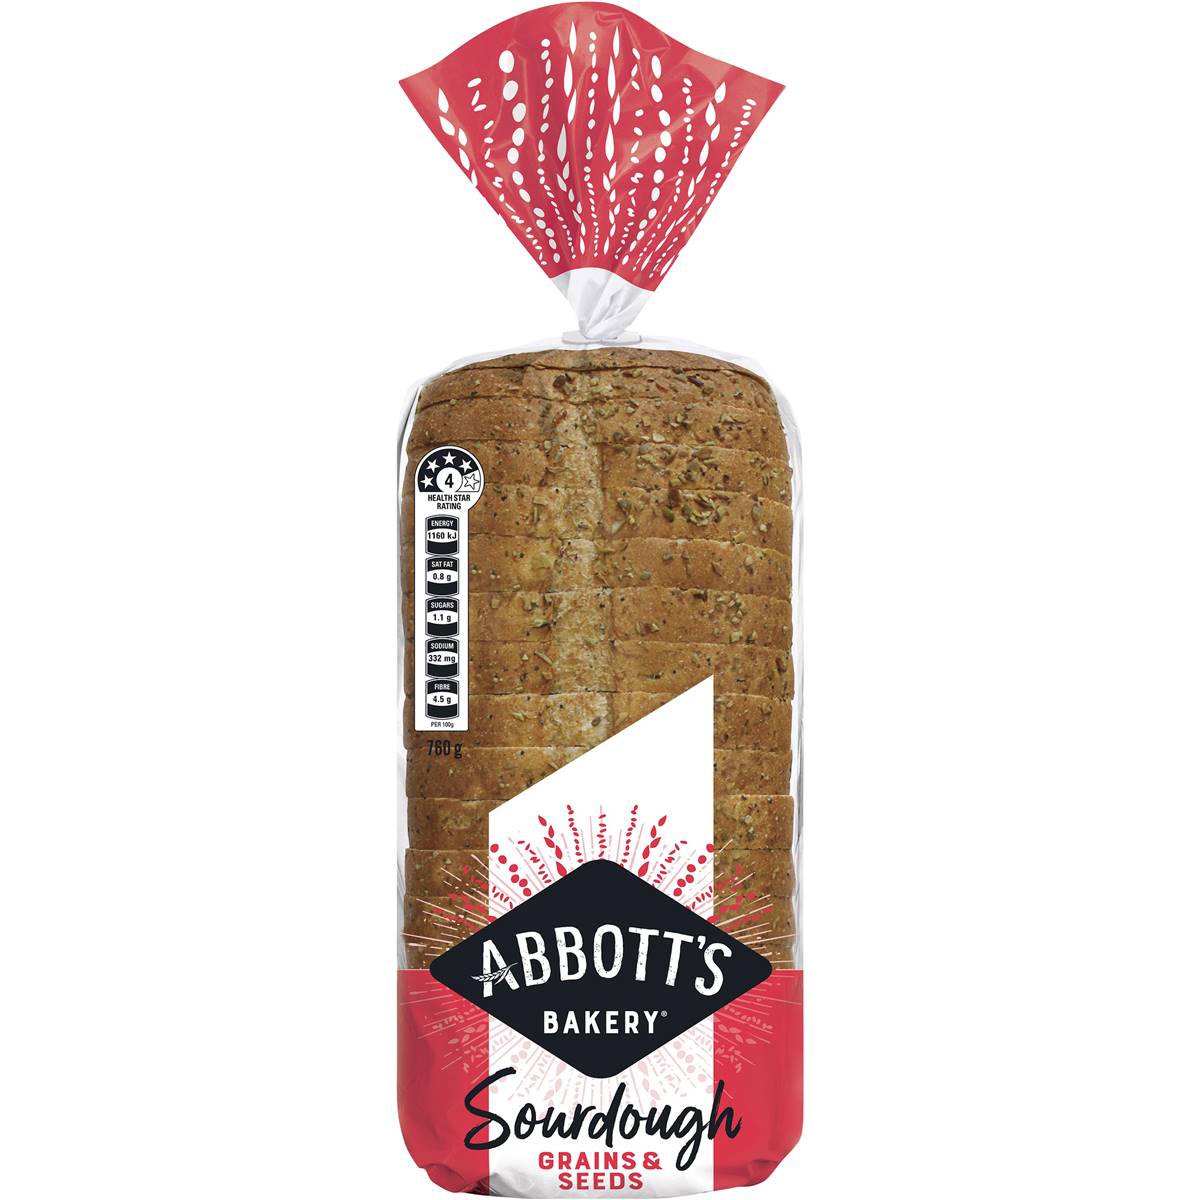 Calories in Abbott's Bakery Sourdough Grains & Seeds Bread Loaf